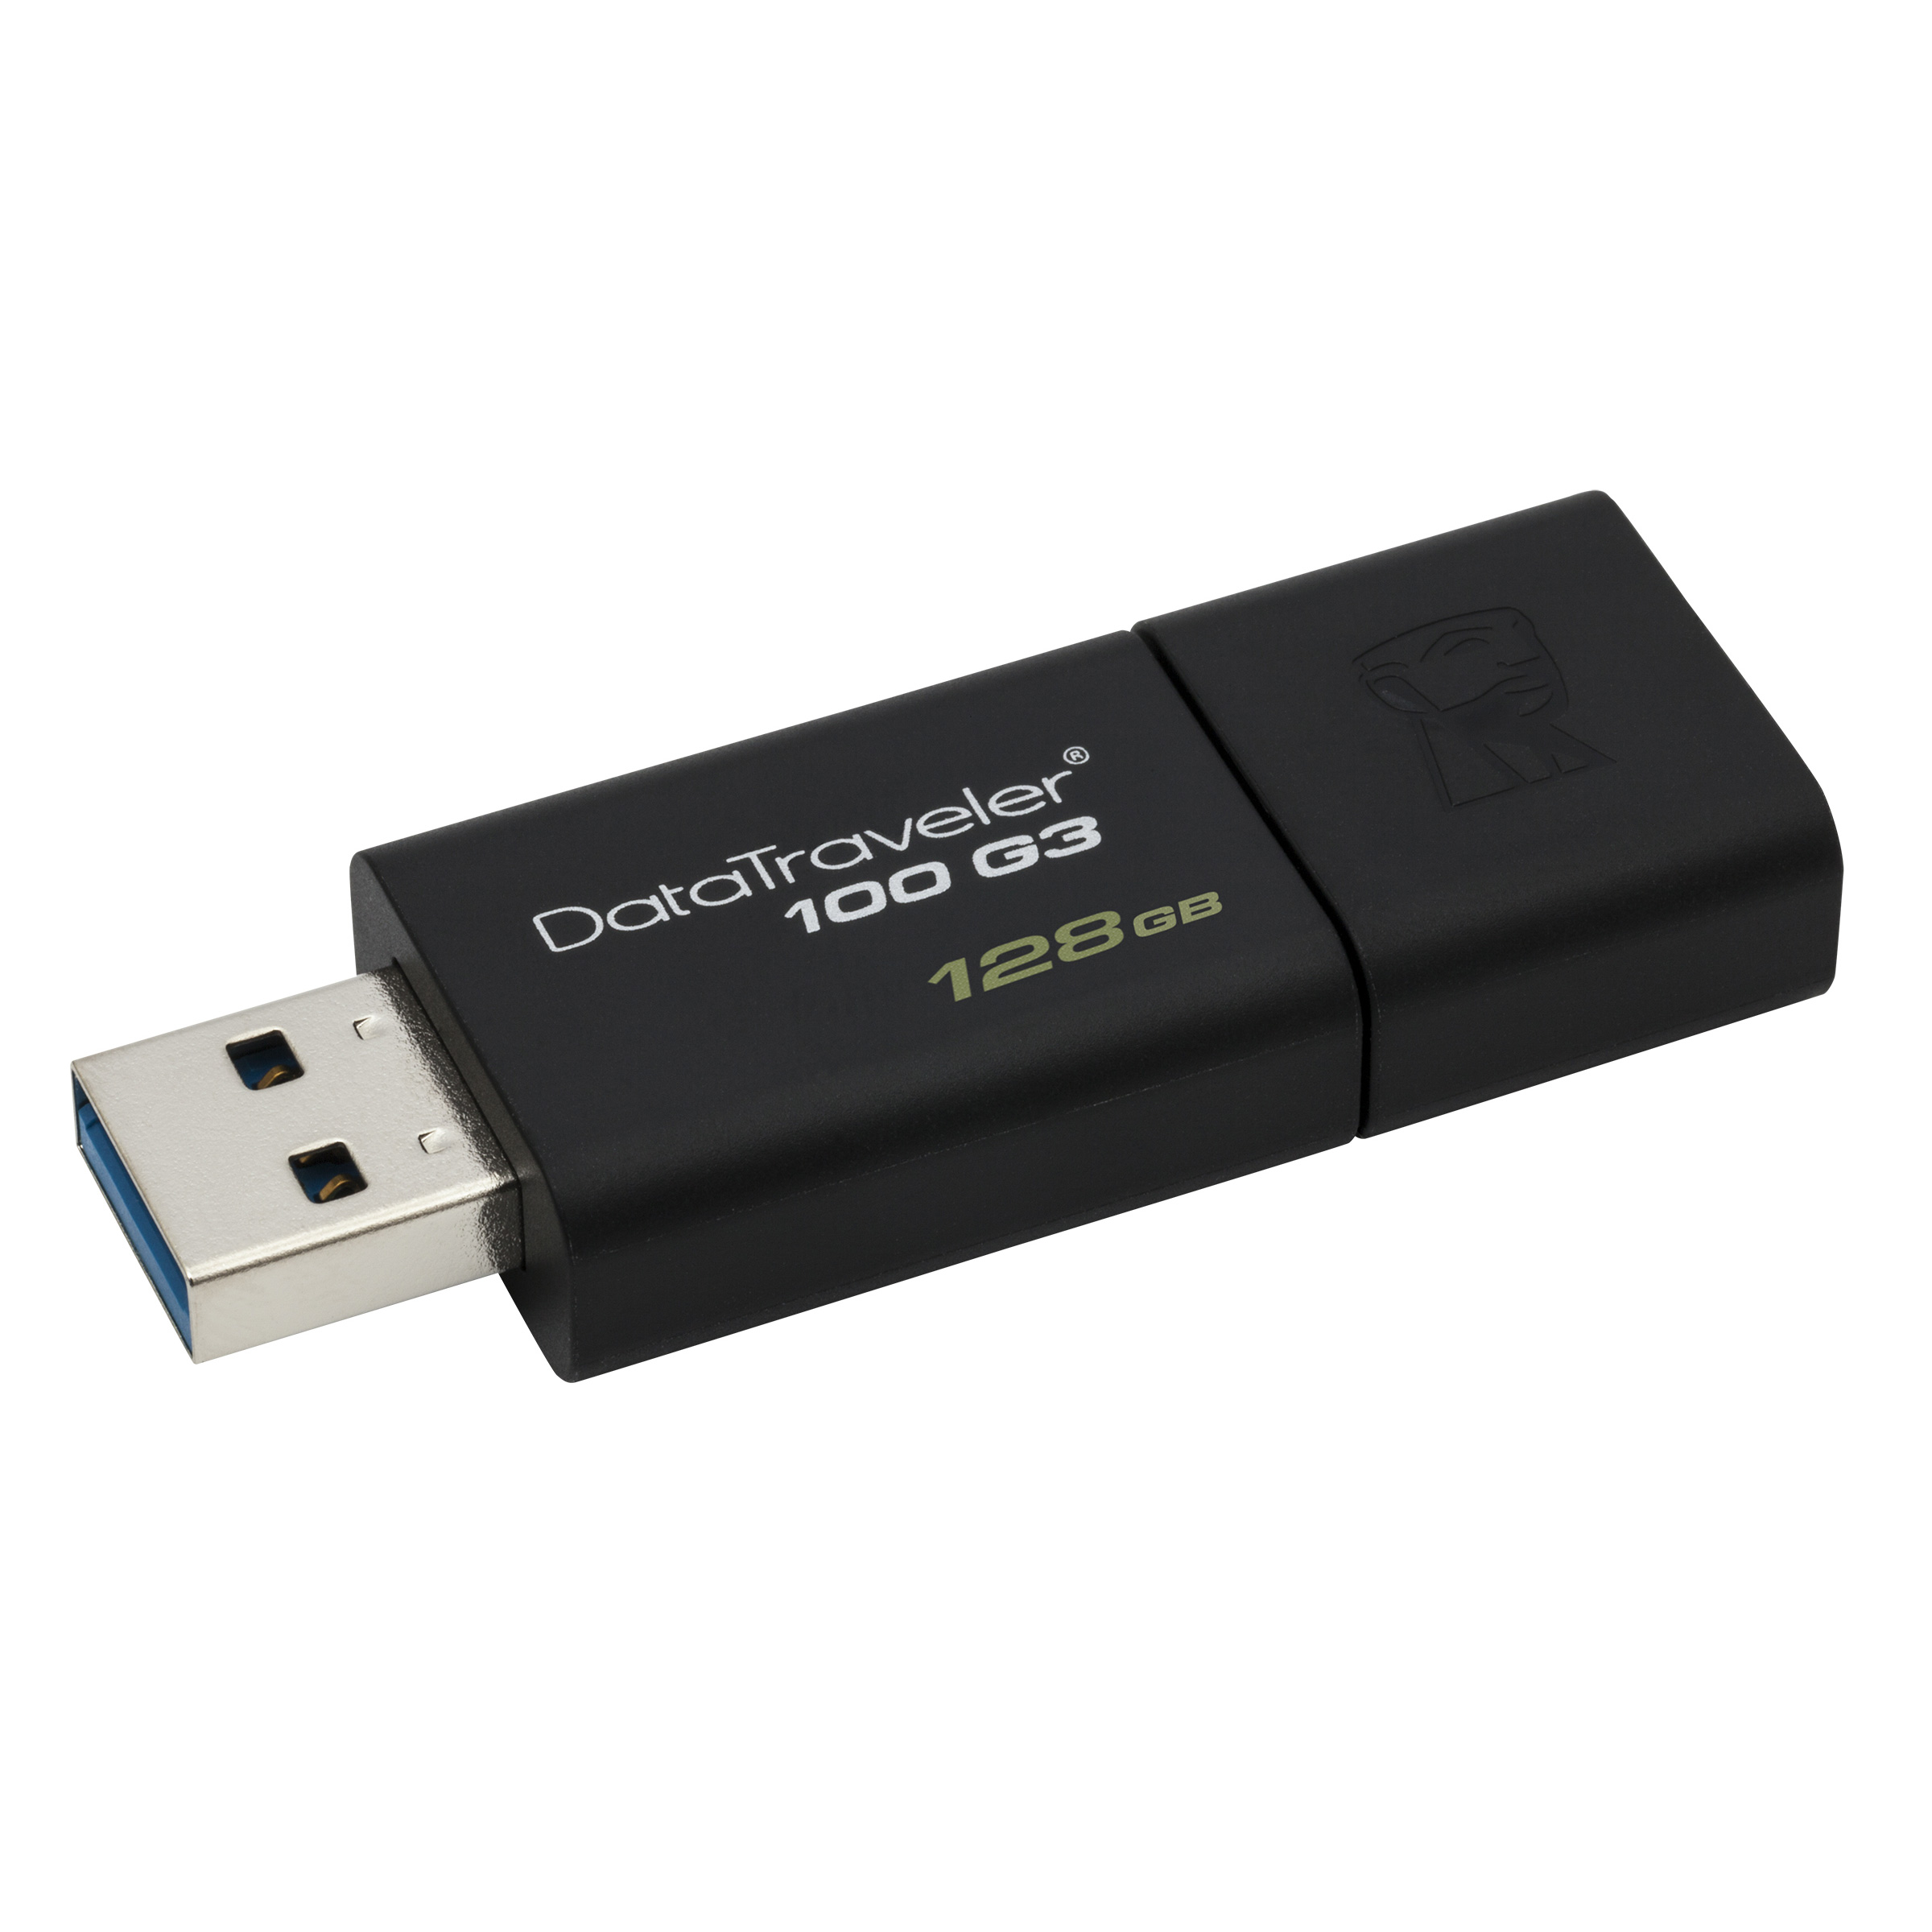 Original Kingston DataTraveler 100 G3 128GB USB 3.0 Flash Drive (DT100G3/128GB)